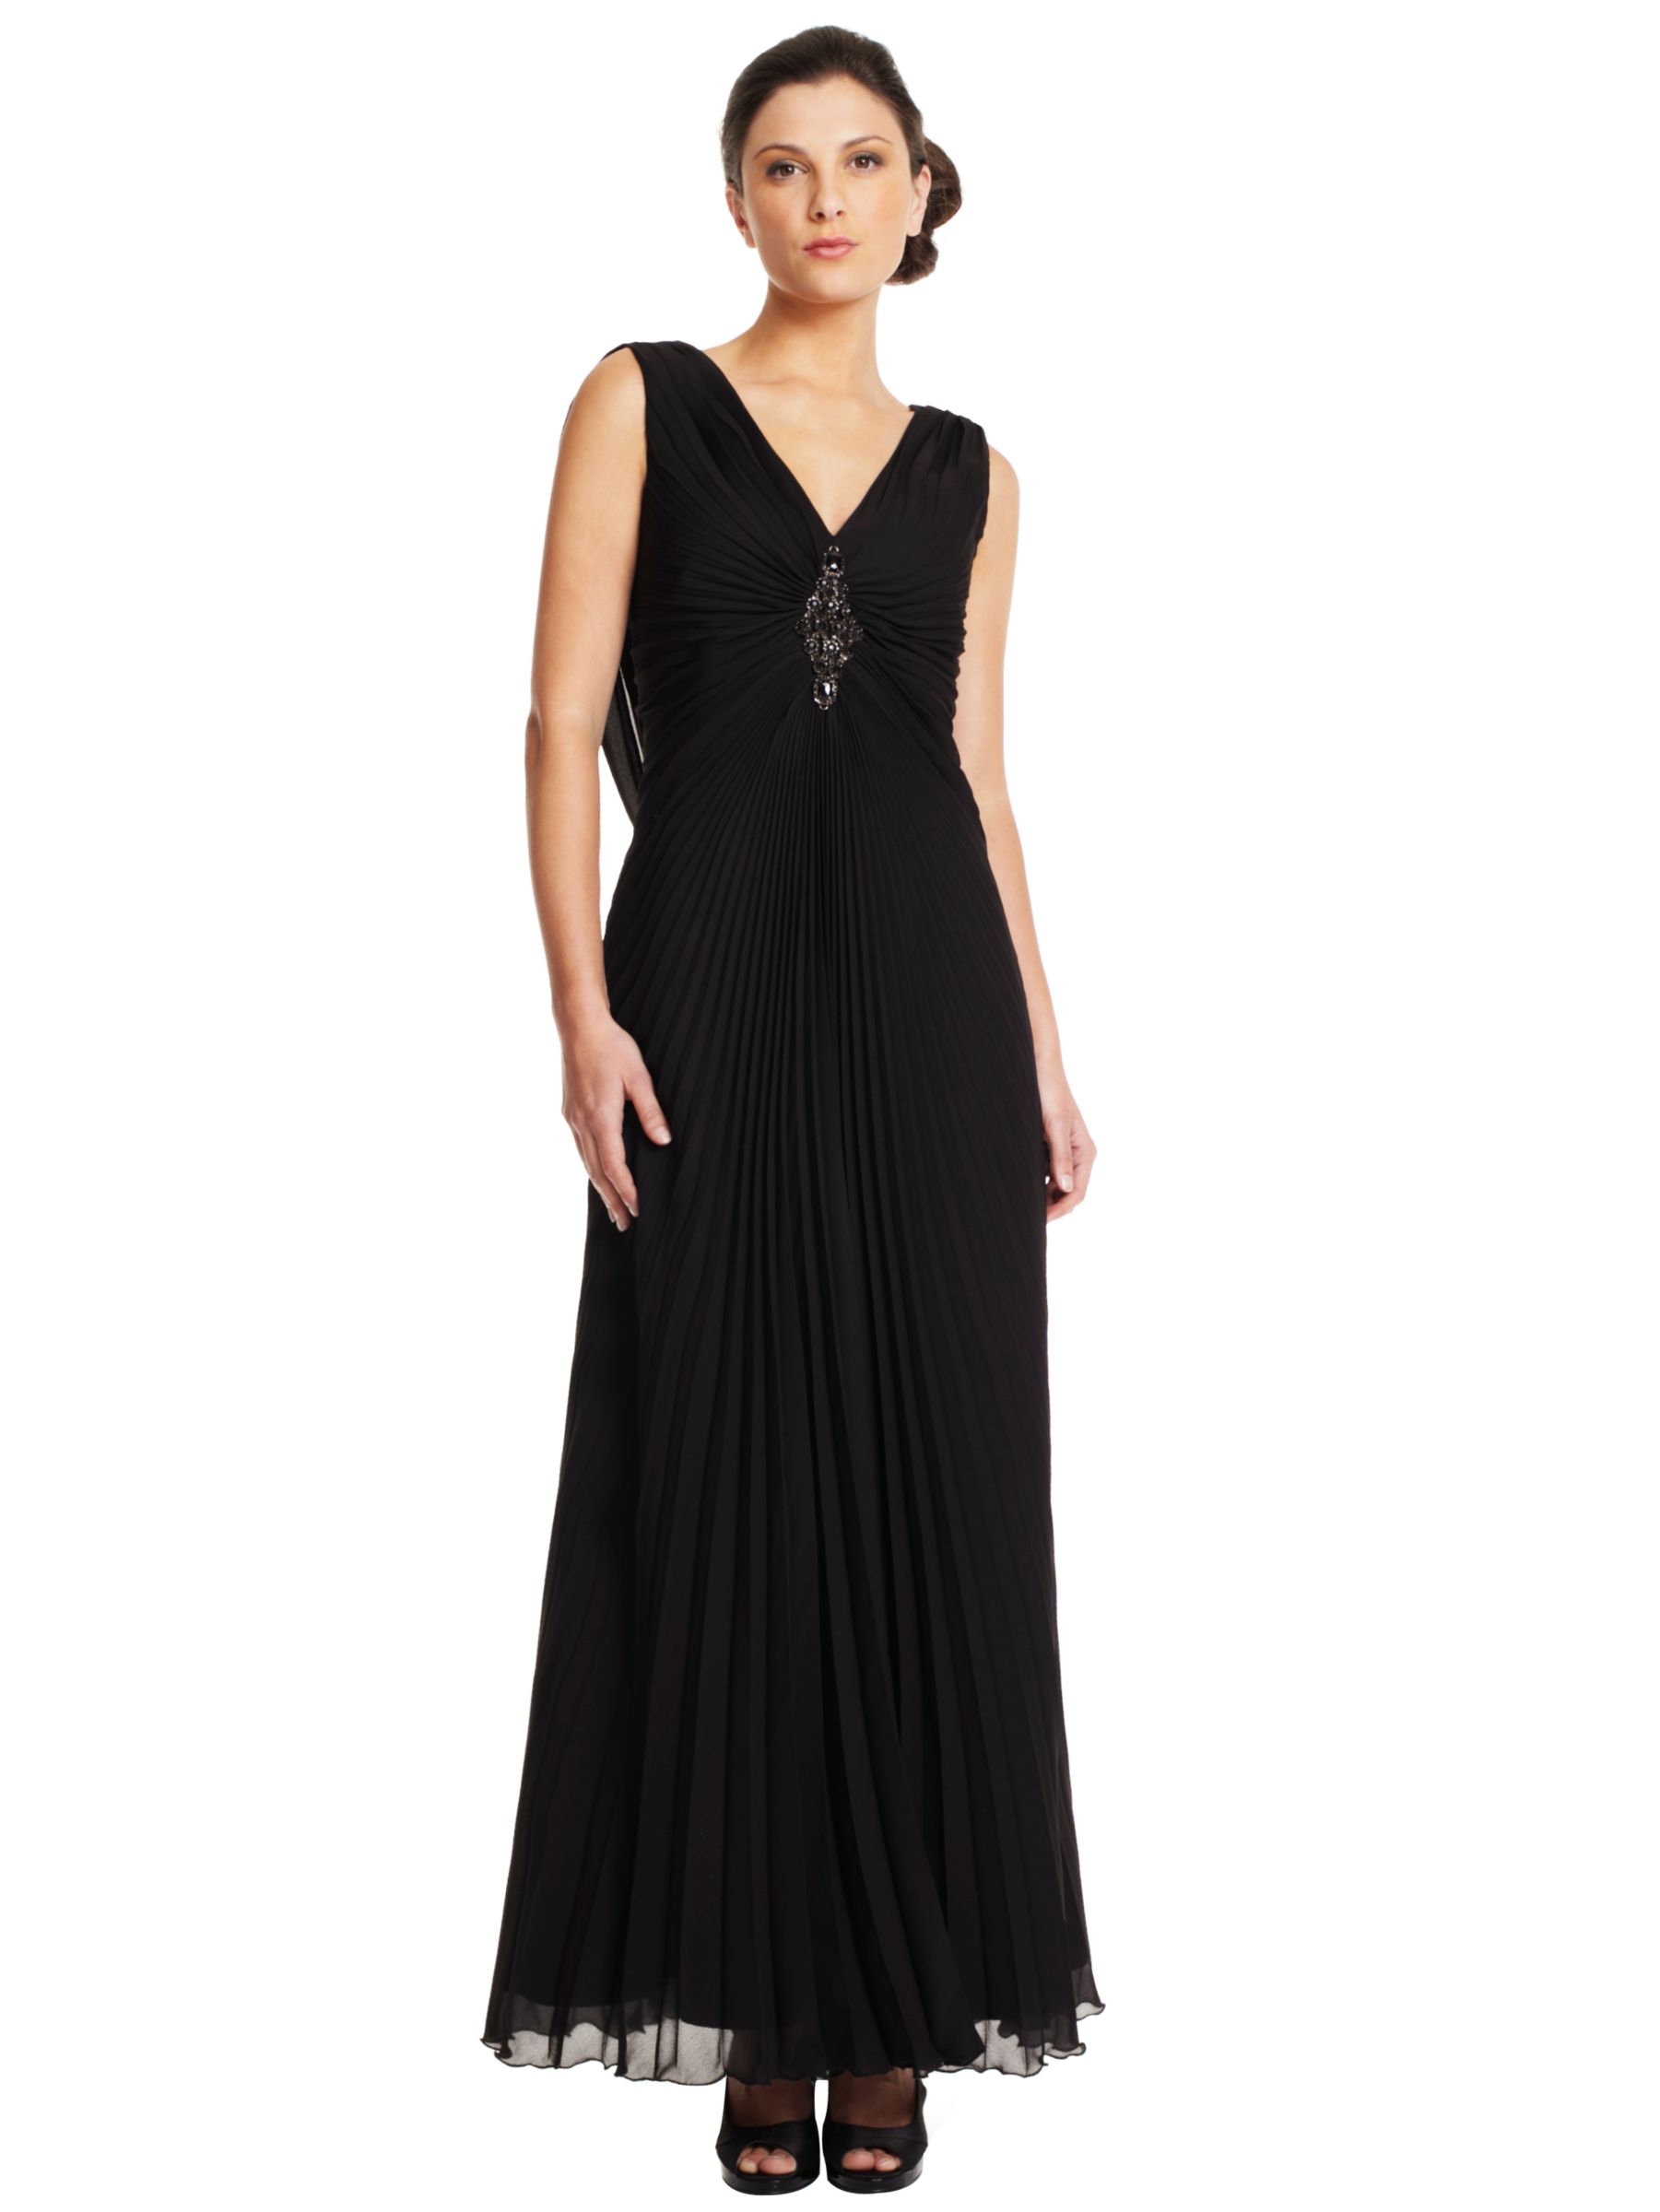 Damsel in a Dress Jessica Dress, Black at JohnLewis